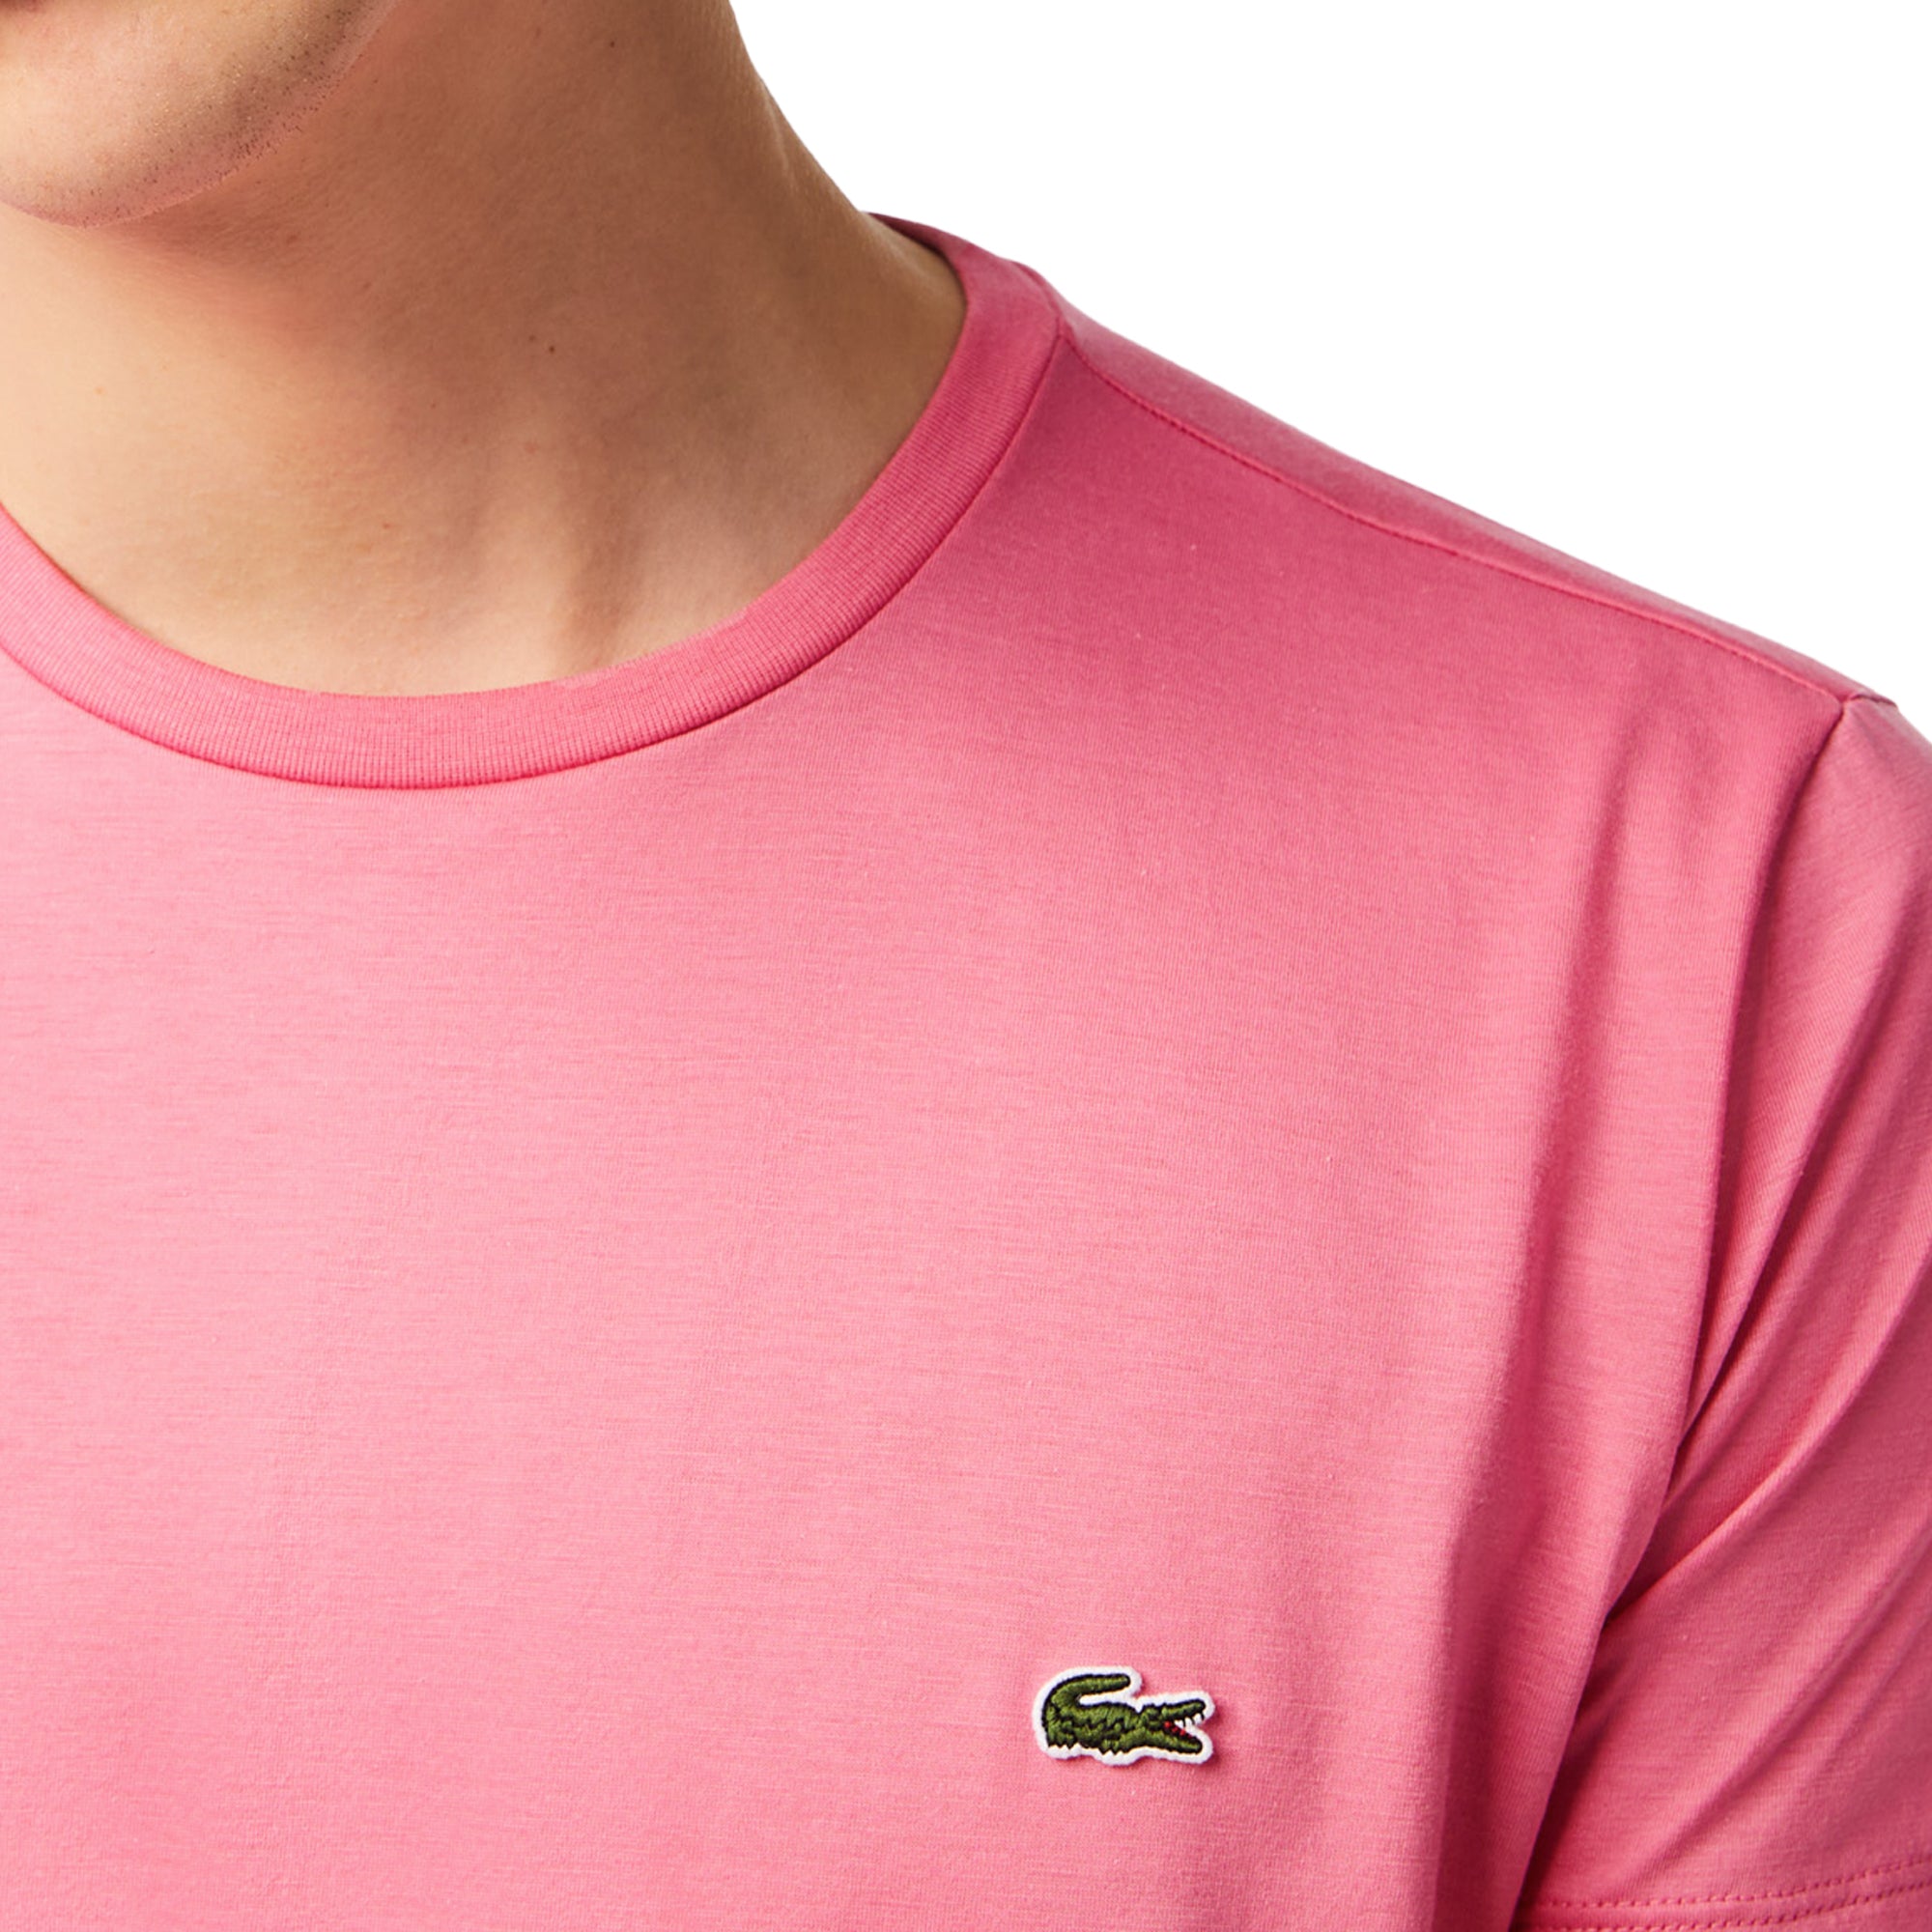 - Lacoste Reseda TH6709 Cotton Pink T-Shirt Pima